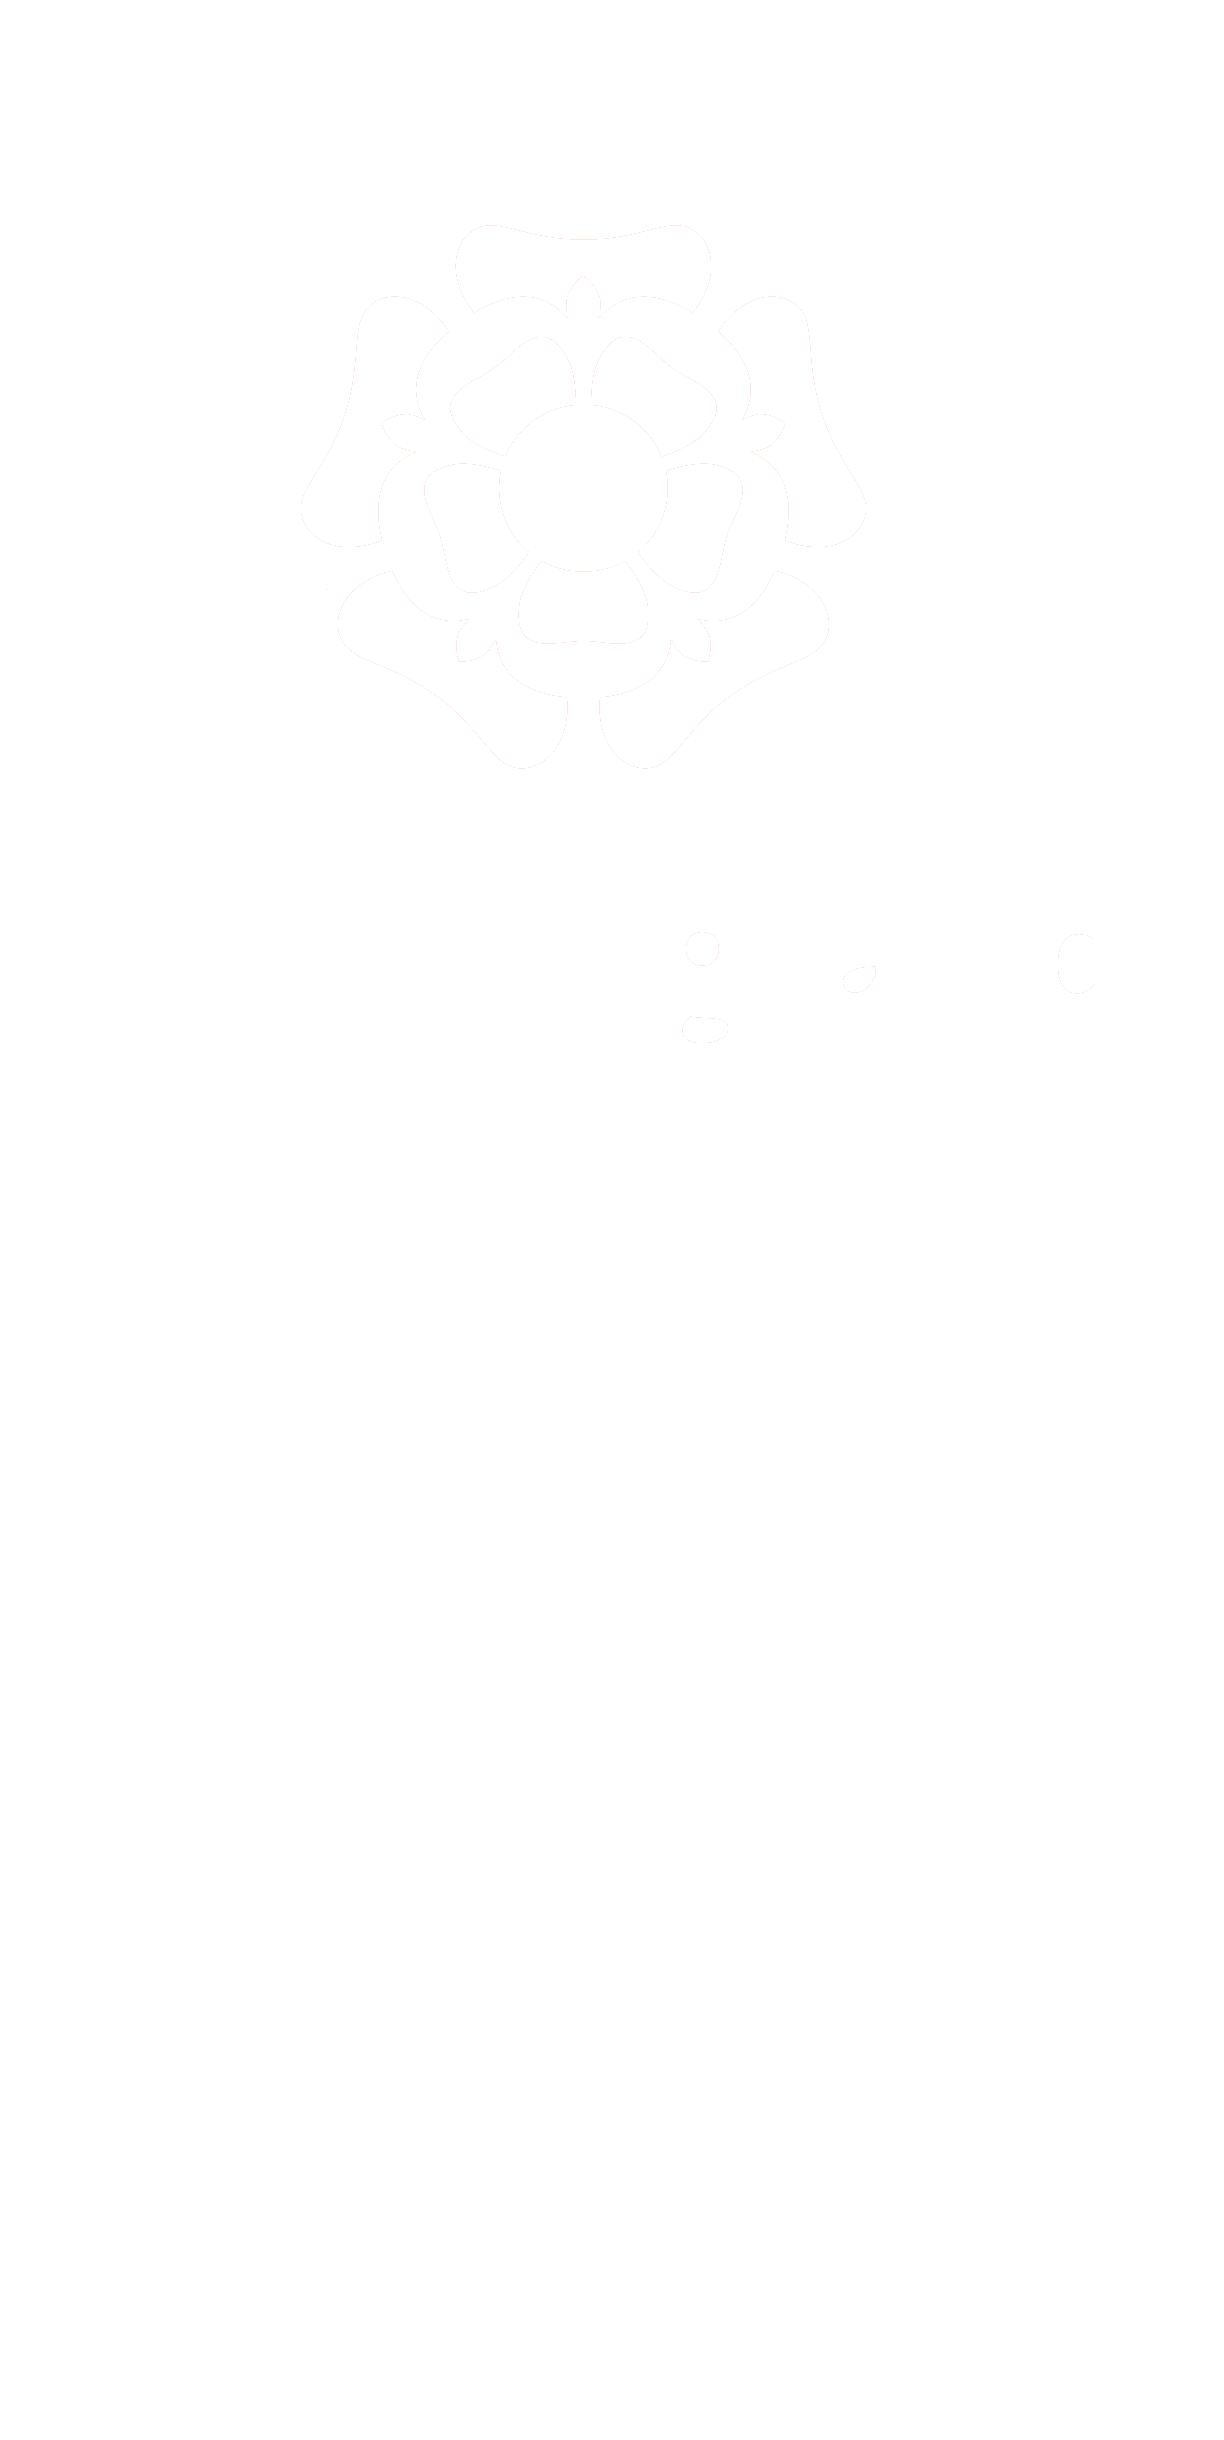 Visit England Gold 2015 logo